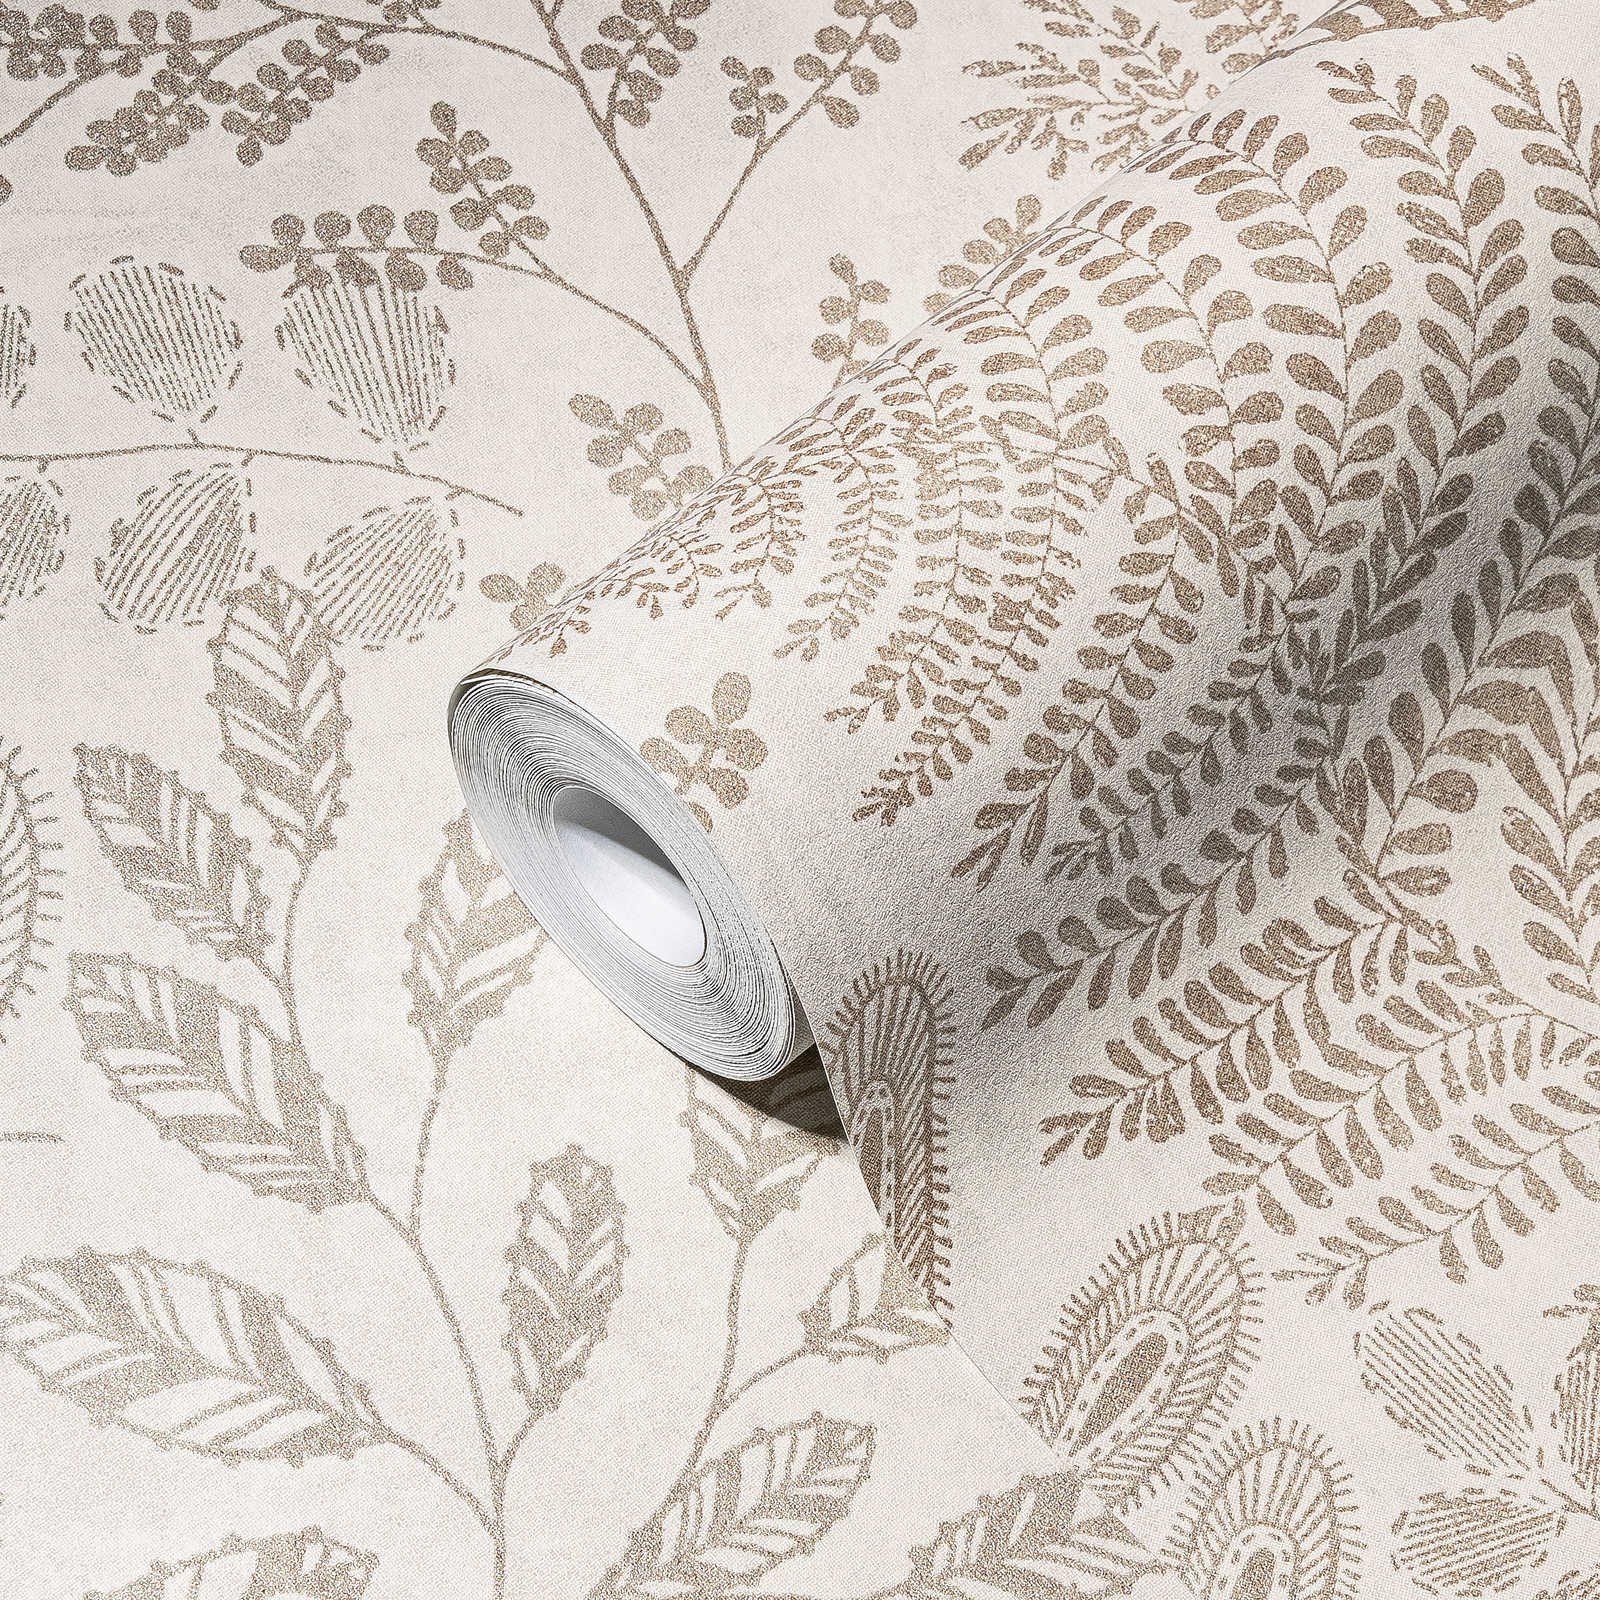             Wallpaper leaves design in boho style - beige, metallic
        